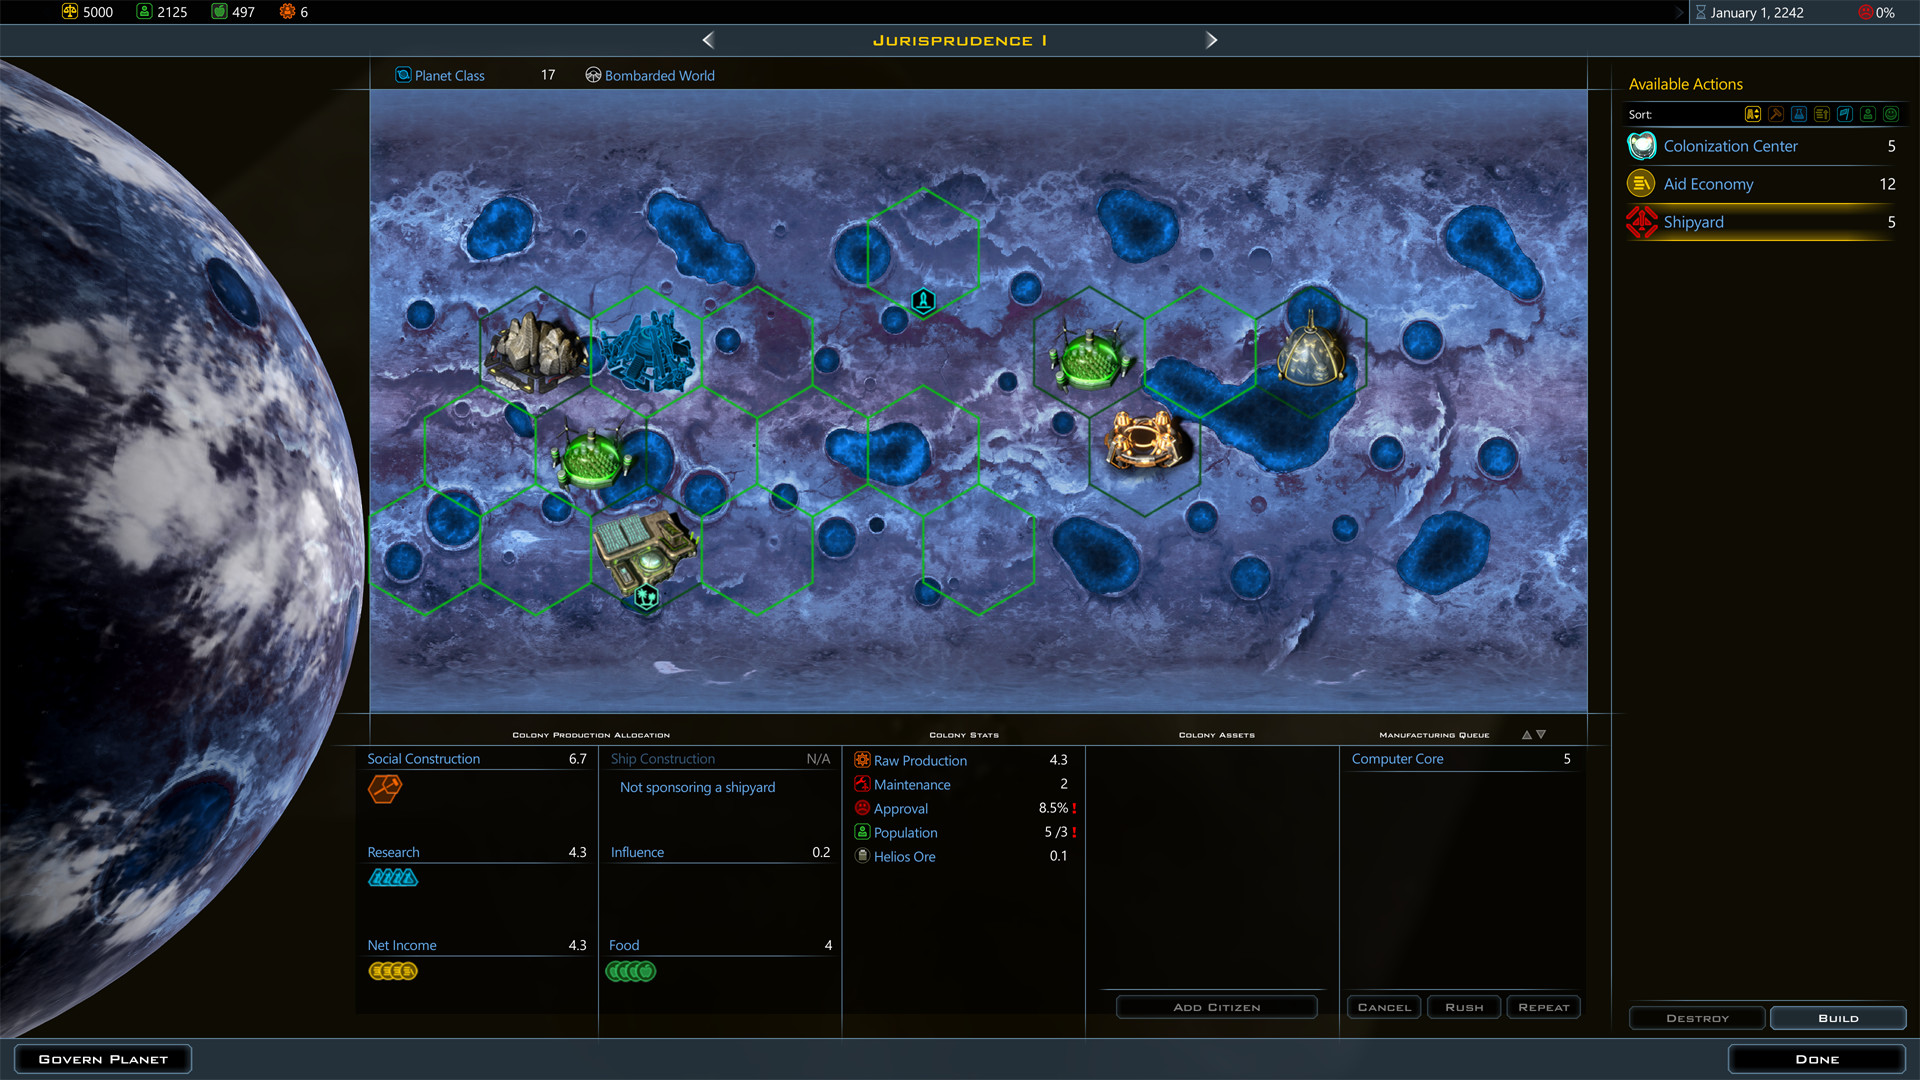 Galactic Civilizations III - Worlds in Crisis DLC Featured Screenshot #1